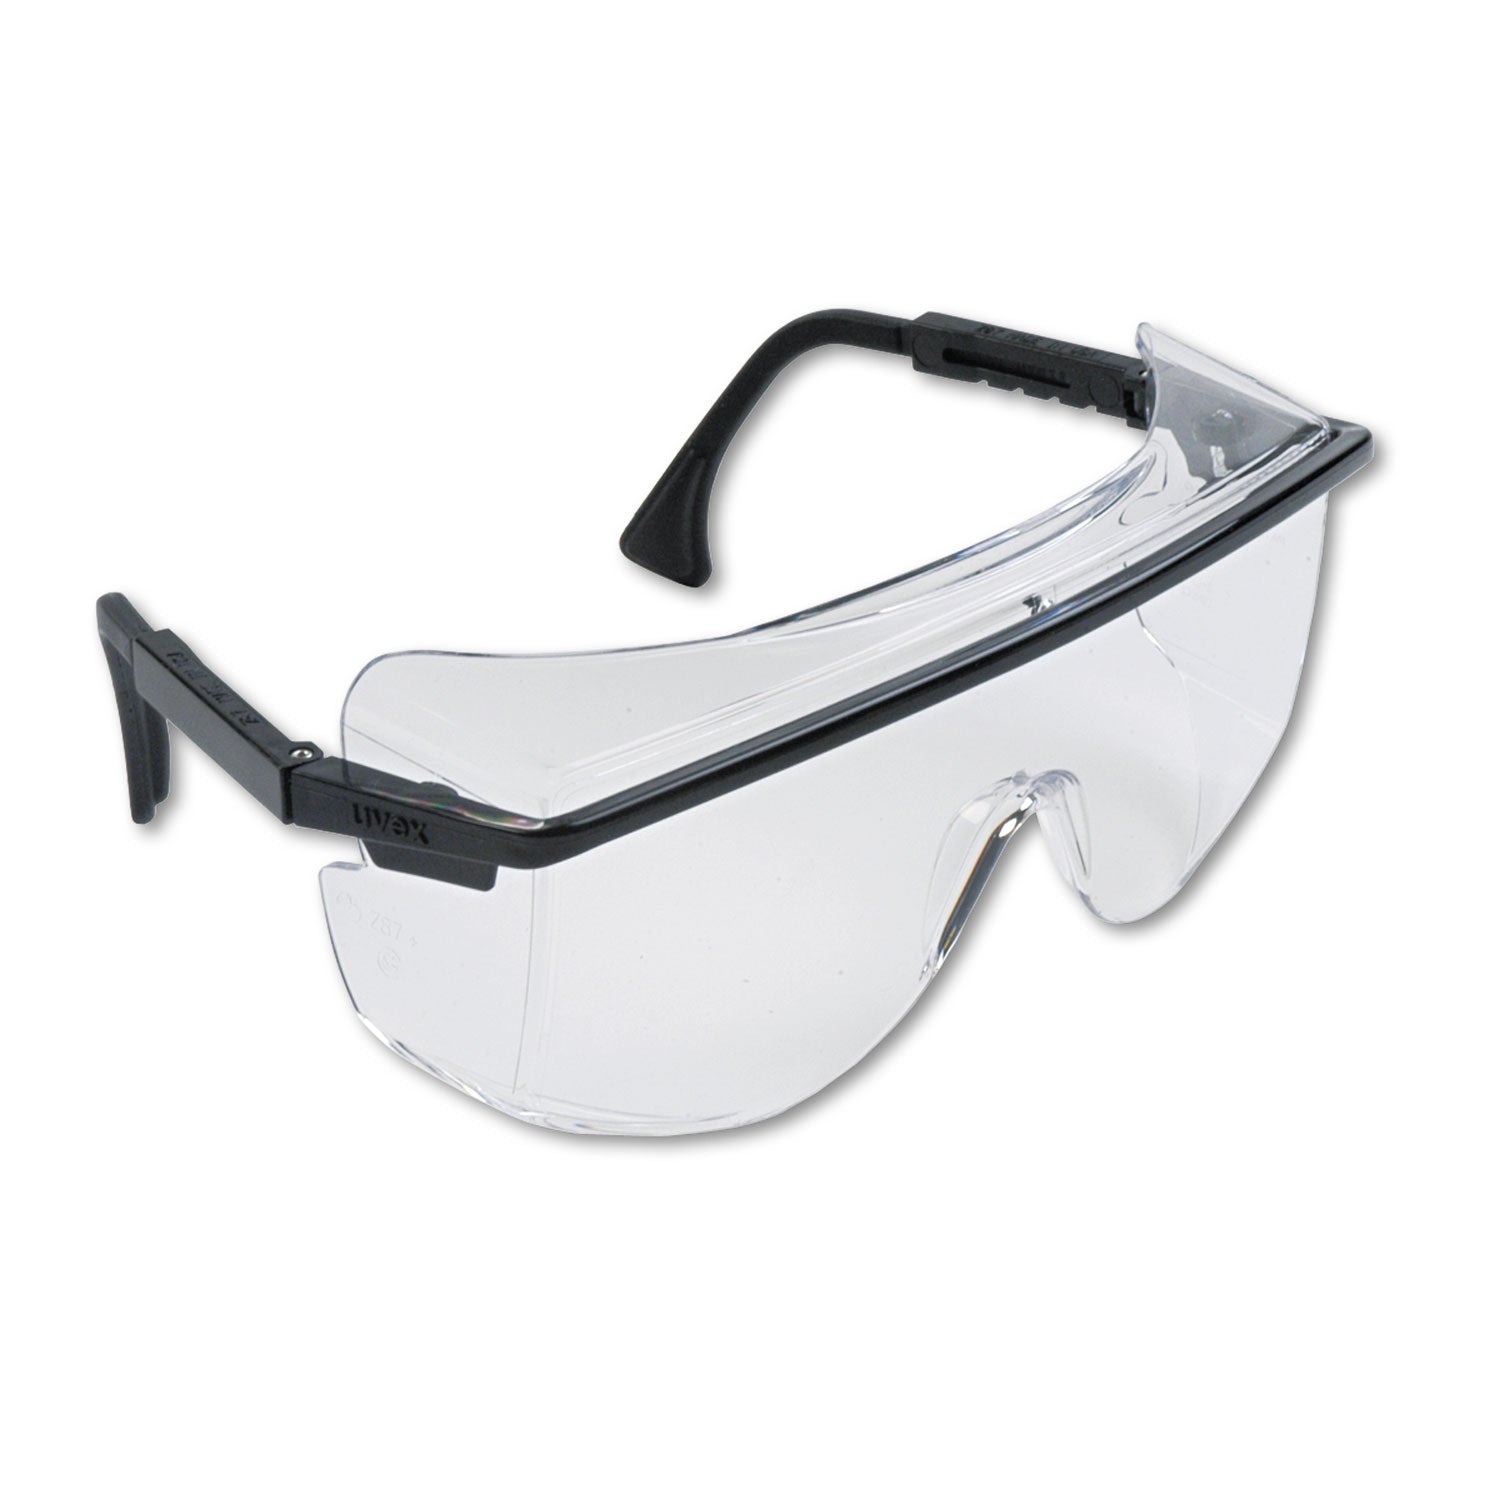 Astro OTG 3001 Wraparound Safety Glasses, Black Plastic Frame, Clear Lens - 